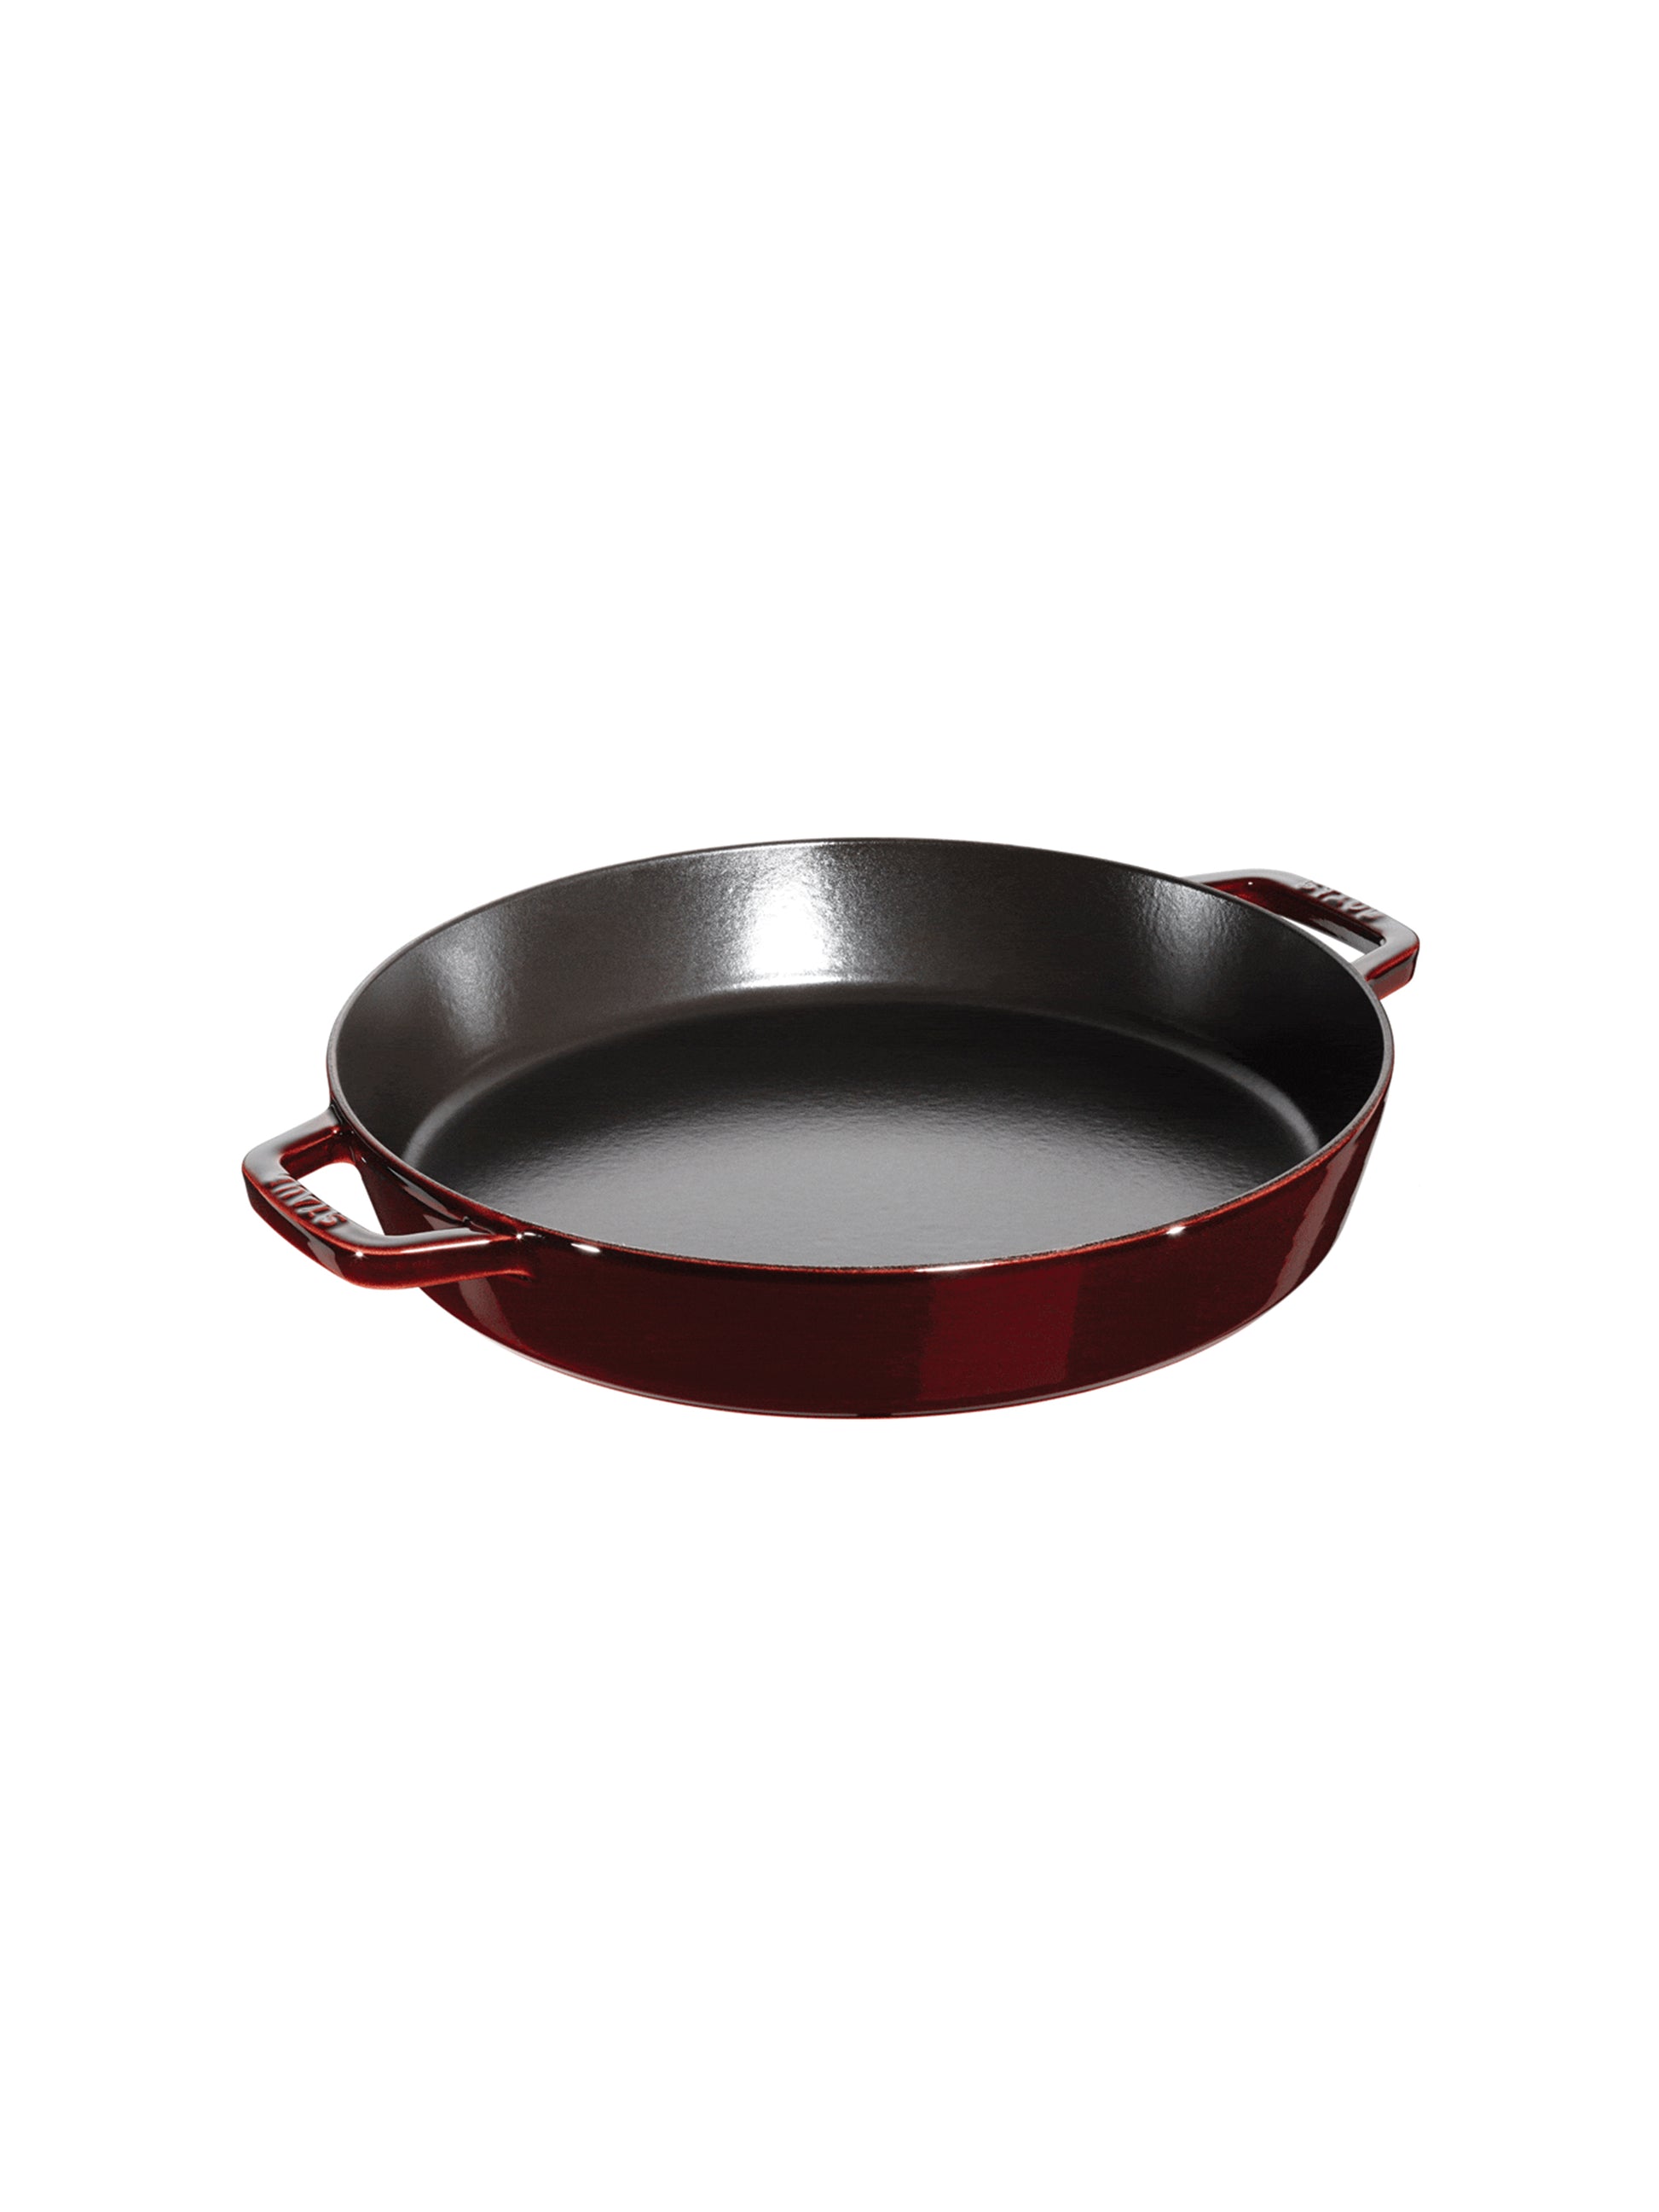 Buy Staub Cast Iron Frying pan